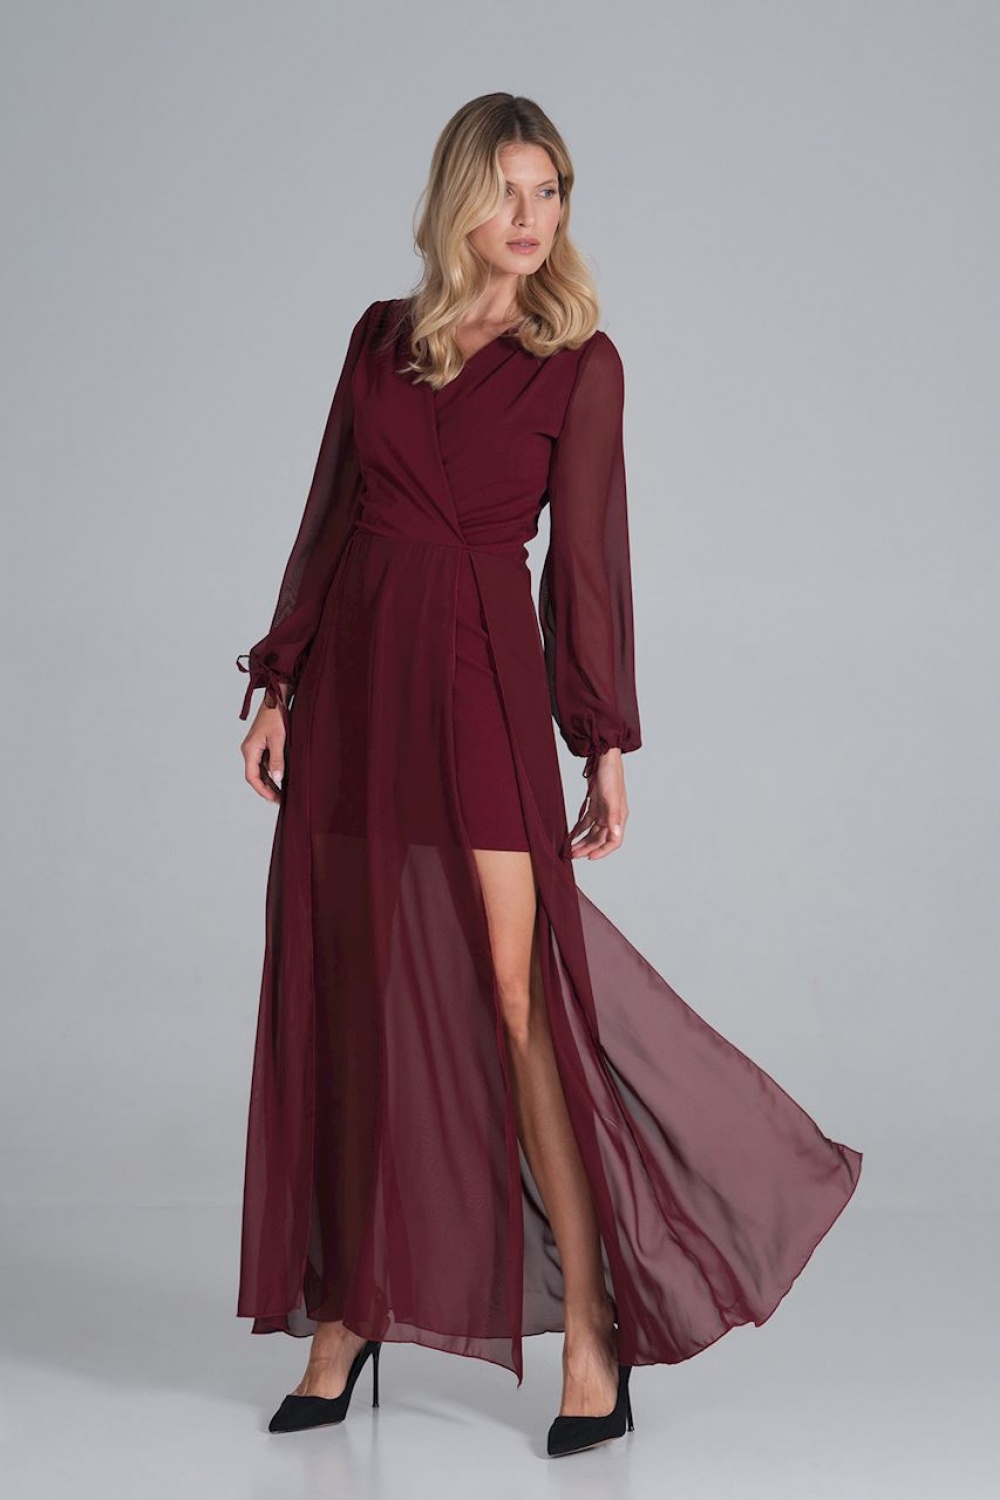  Evening dress model 160982 Figl  red